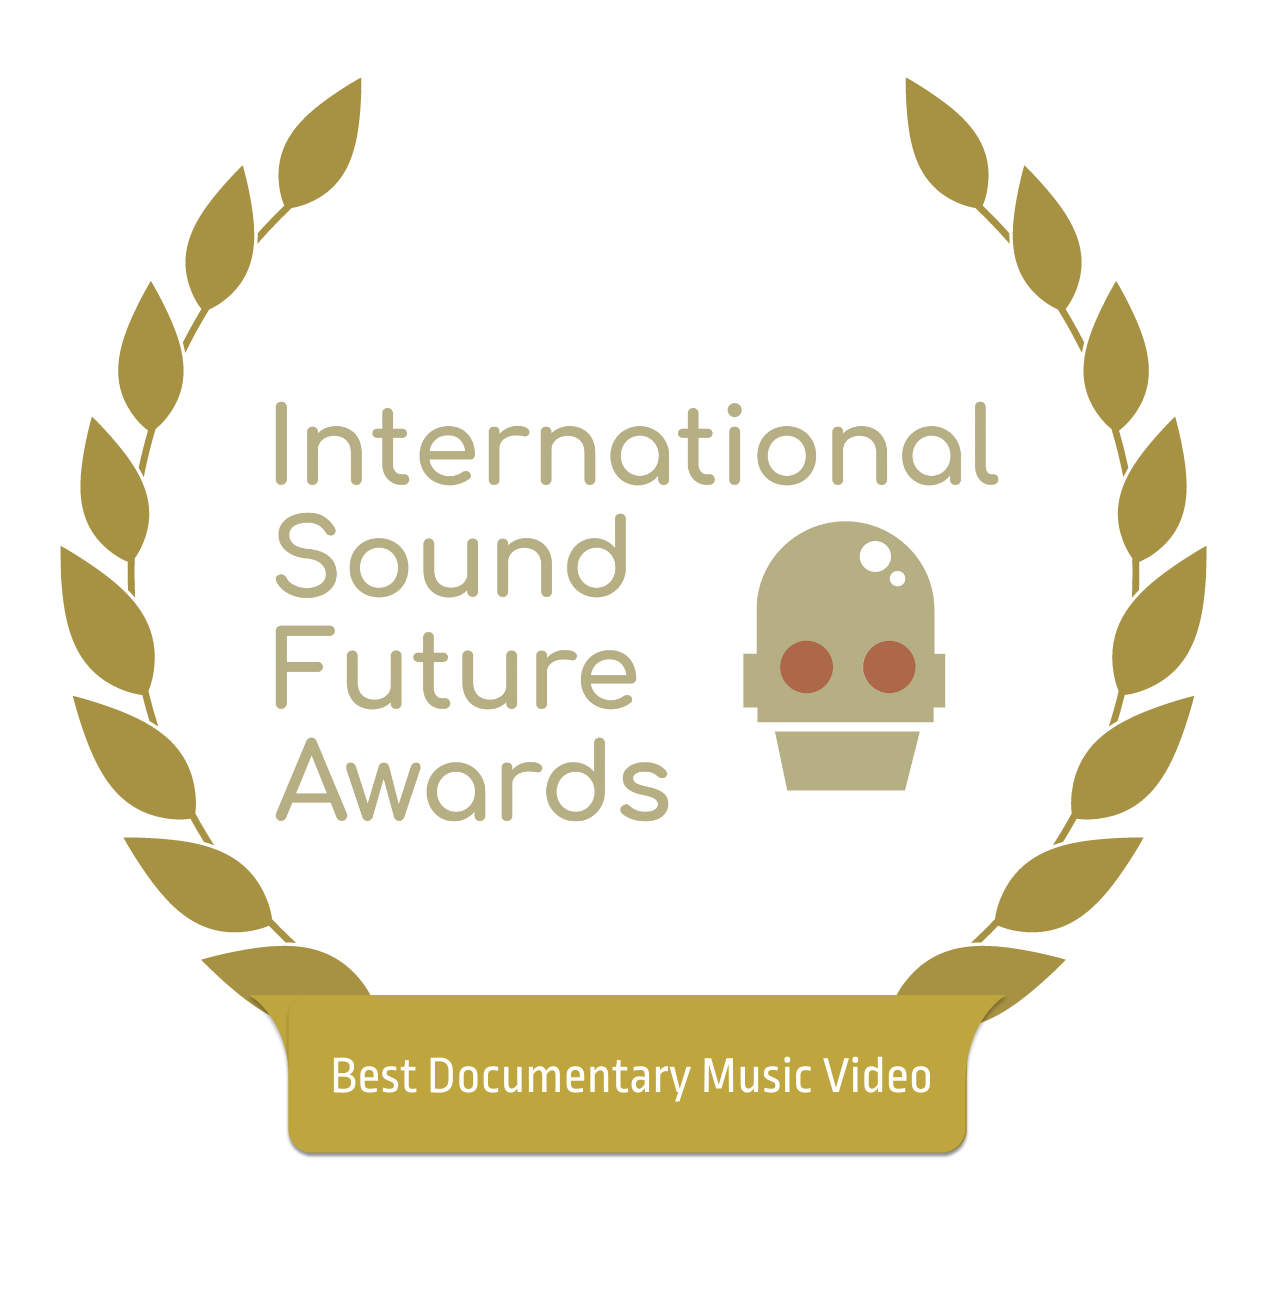 Winner Best Documentary Music Video International Sound Future Awards New York 2022